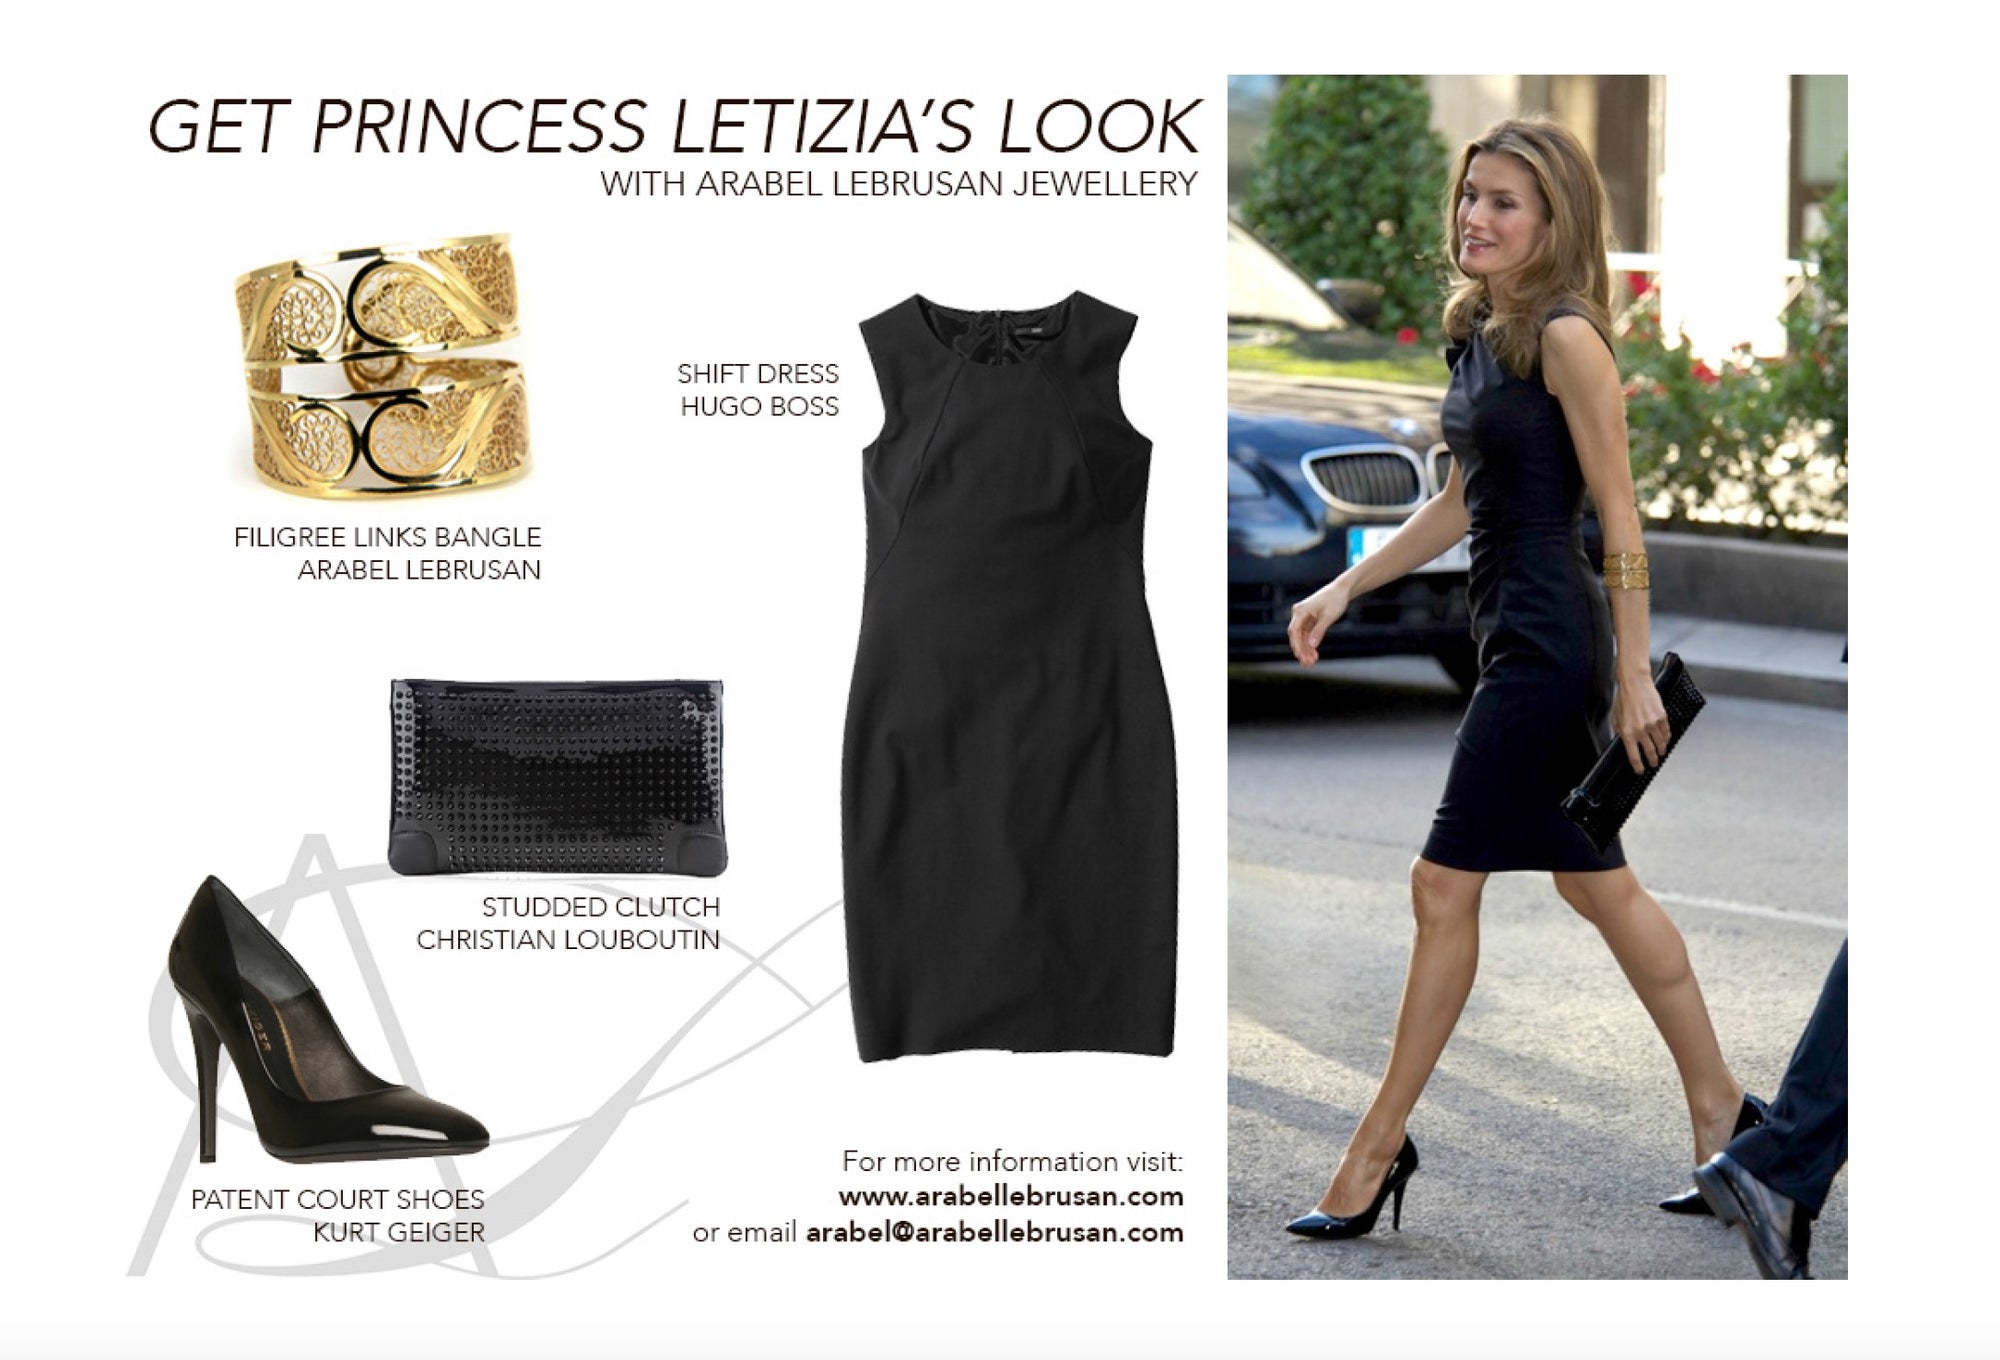 HRH Princess Letizia of Spain wearing Arabel Lebrusan Jewellery